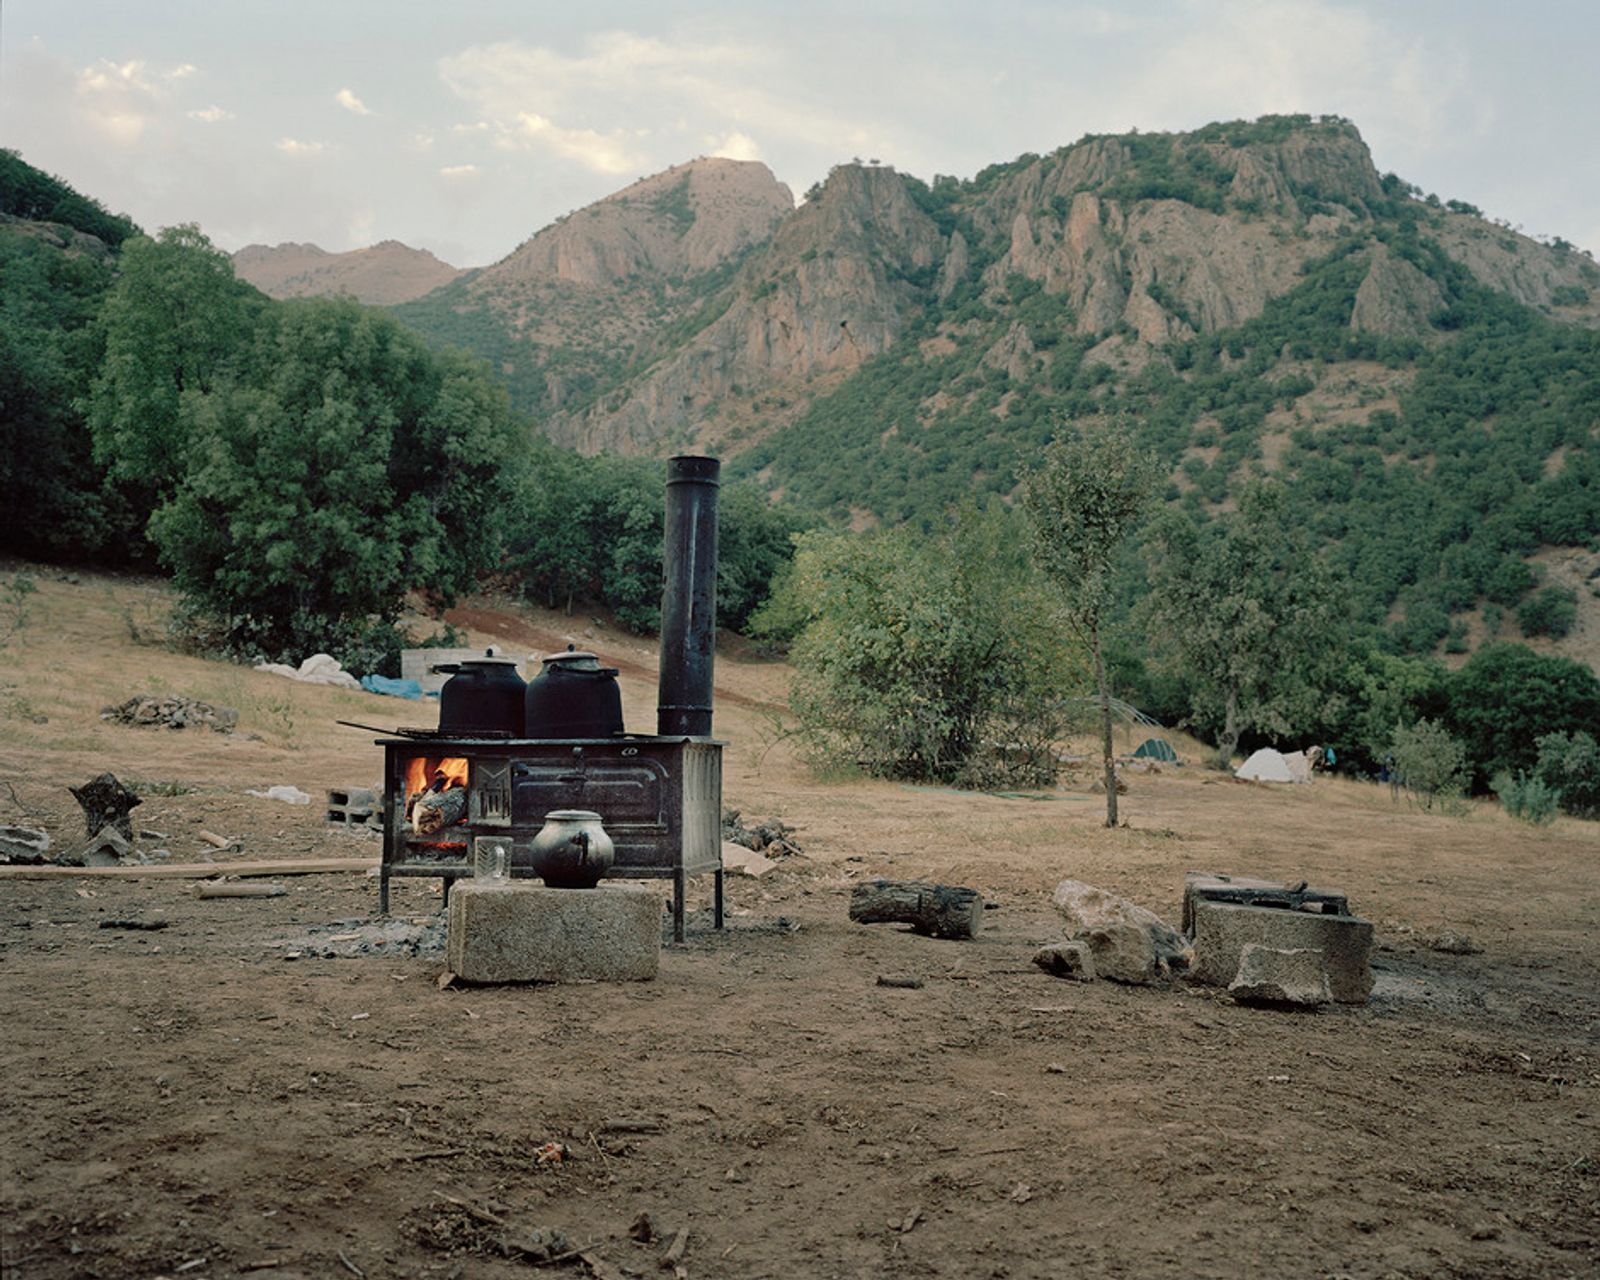 © Miriam Stanke - Preparing tea on a cast iron oven in a temporary guerrilla camp.